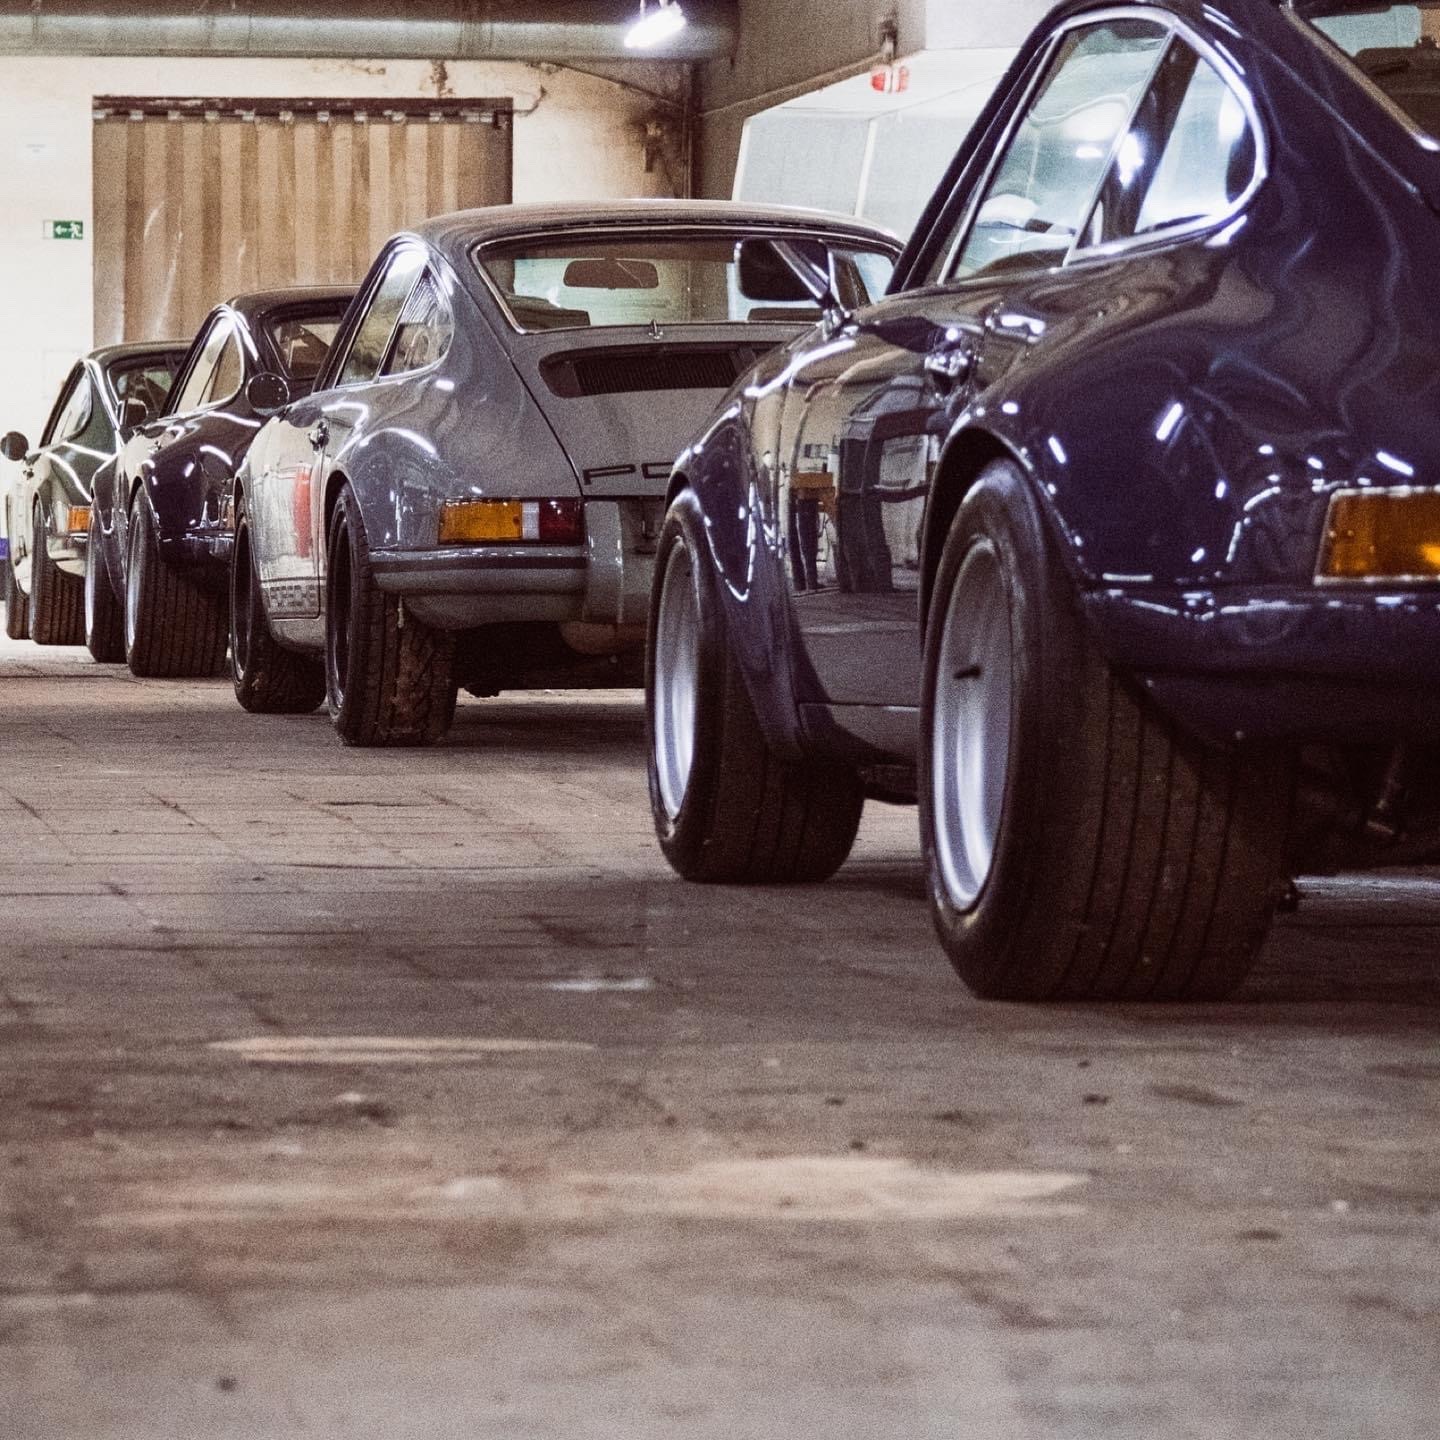 1440x1440, 417 Kb / автомобиль, классика, ретро, гараж, порше, Porsche